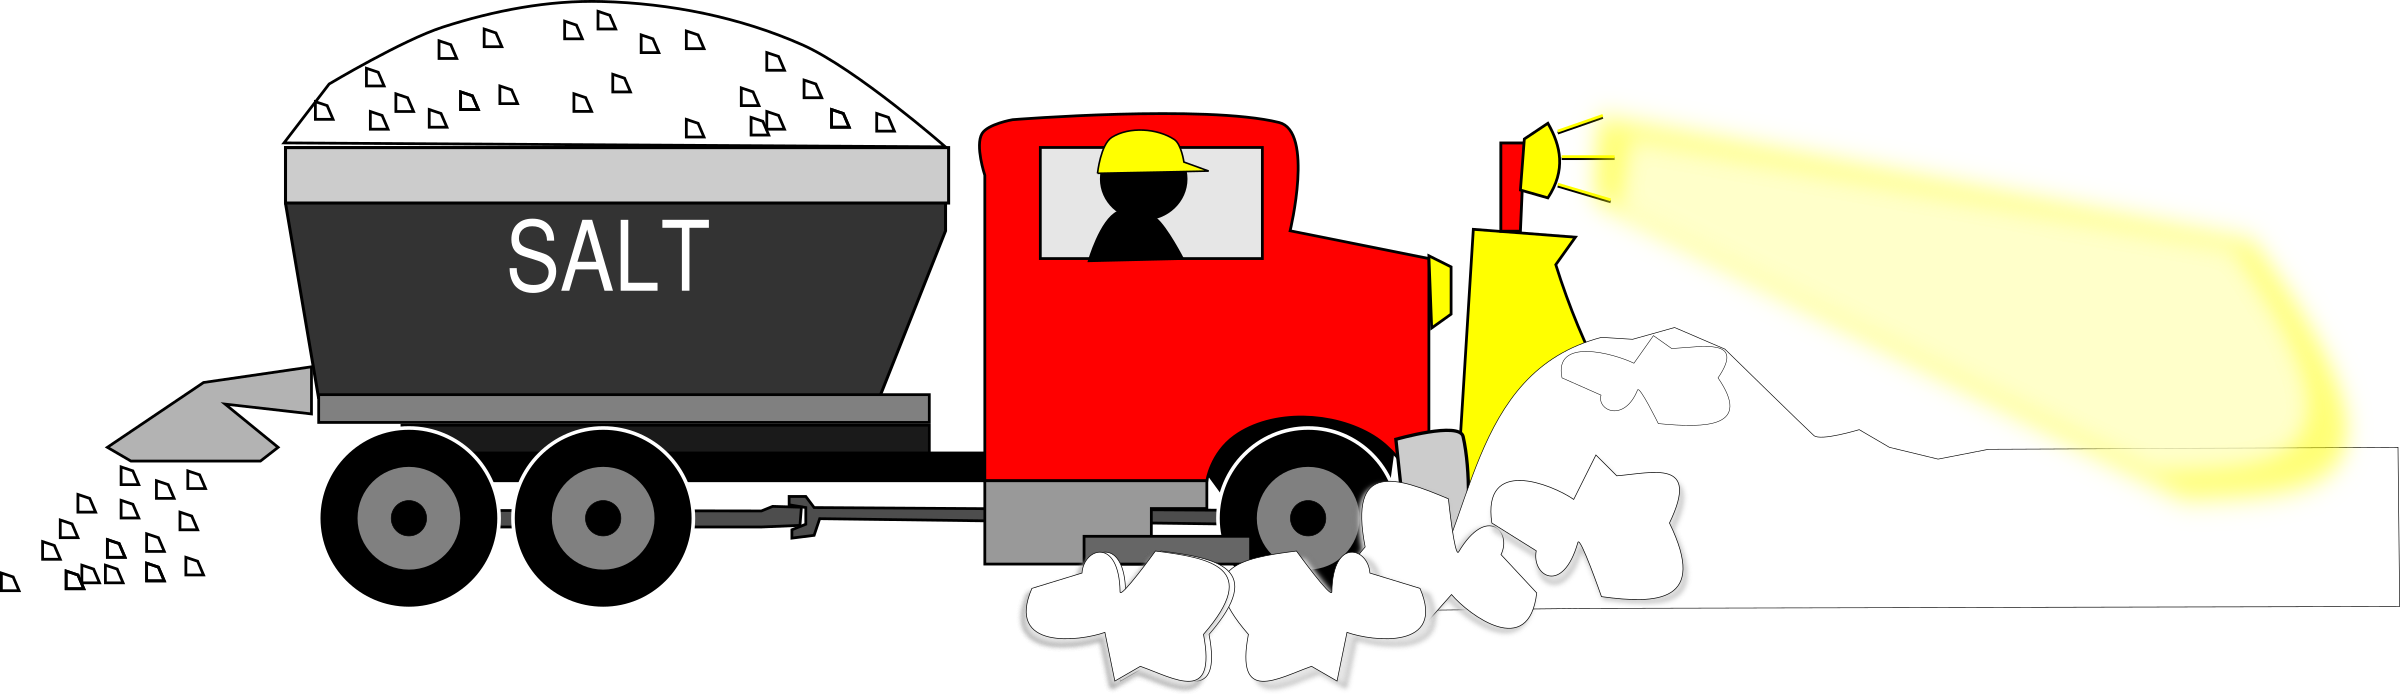 clip art snow plow truck free - photo #25